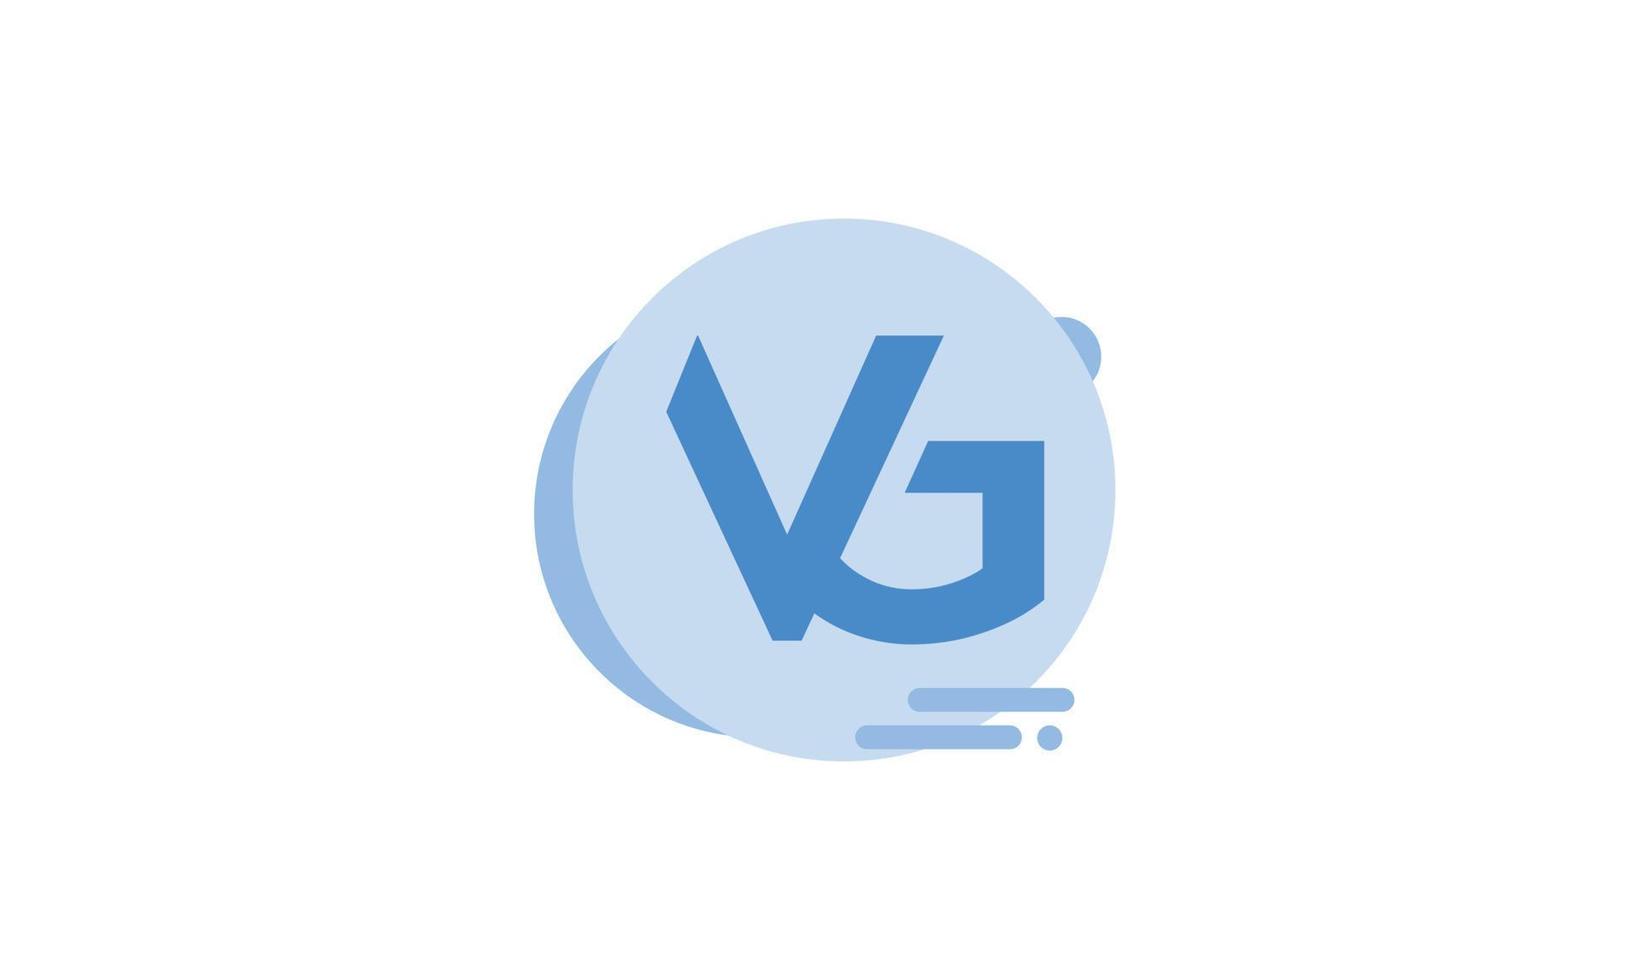 letras do alfabeto iniciais monograma logotipo vg, gv, v e g vetor